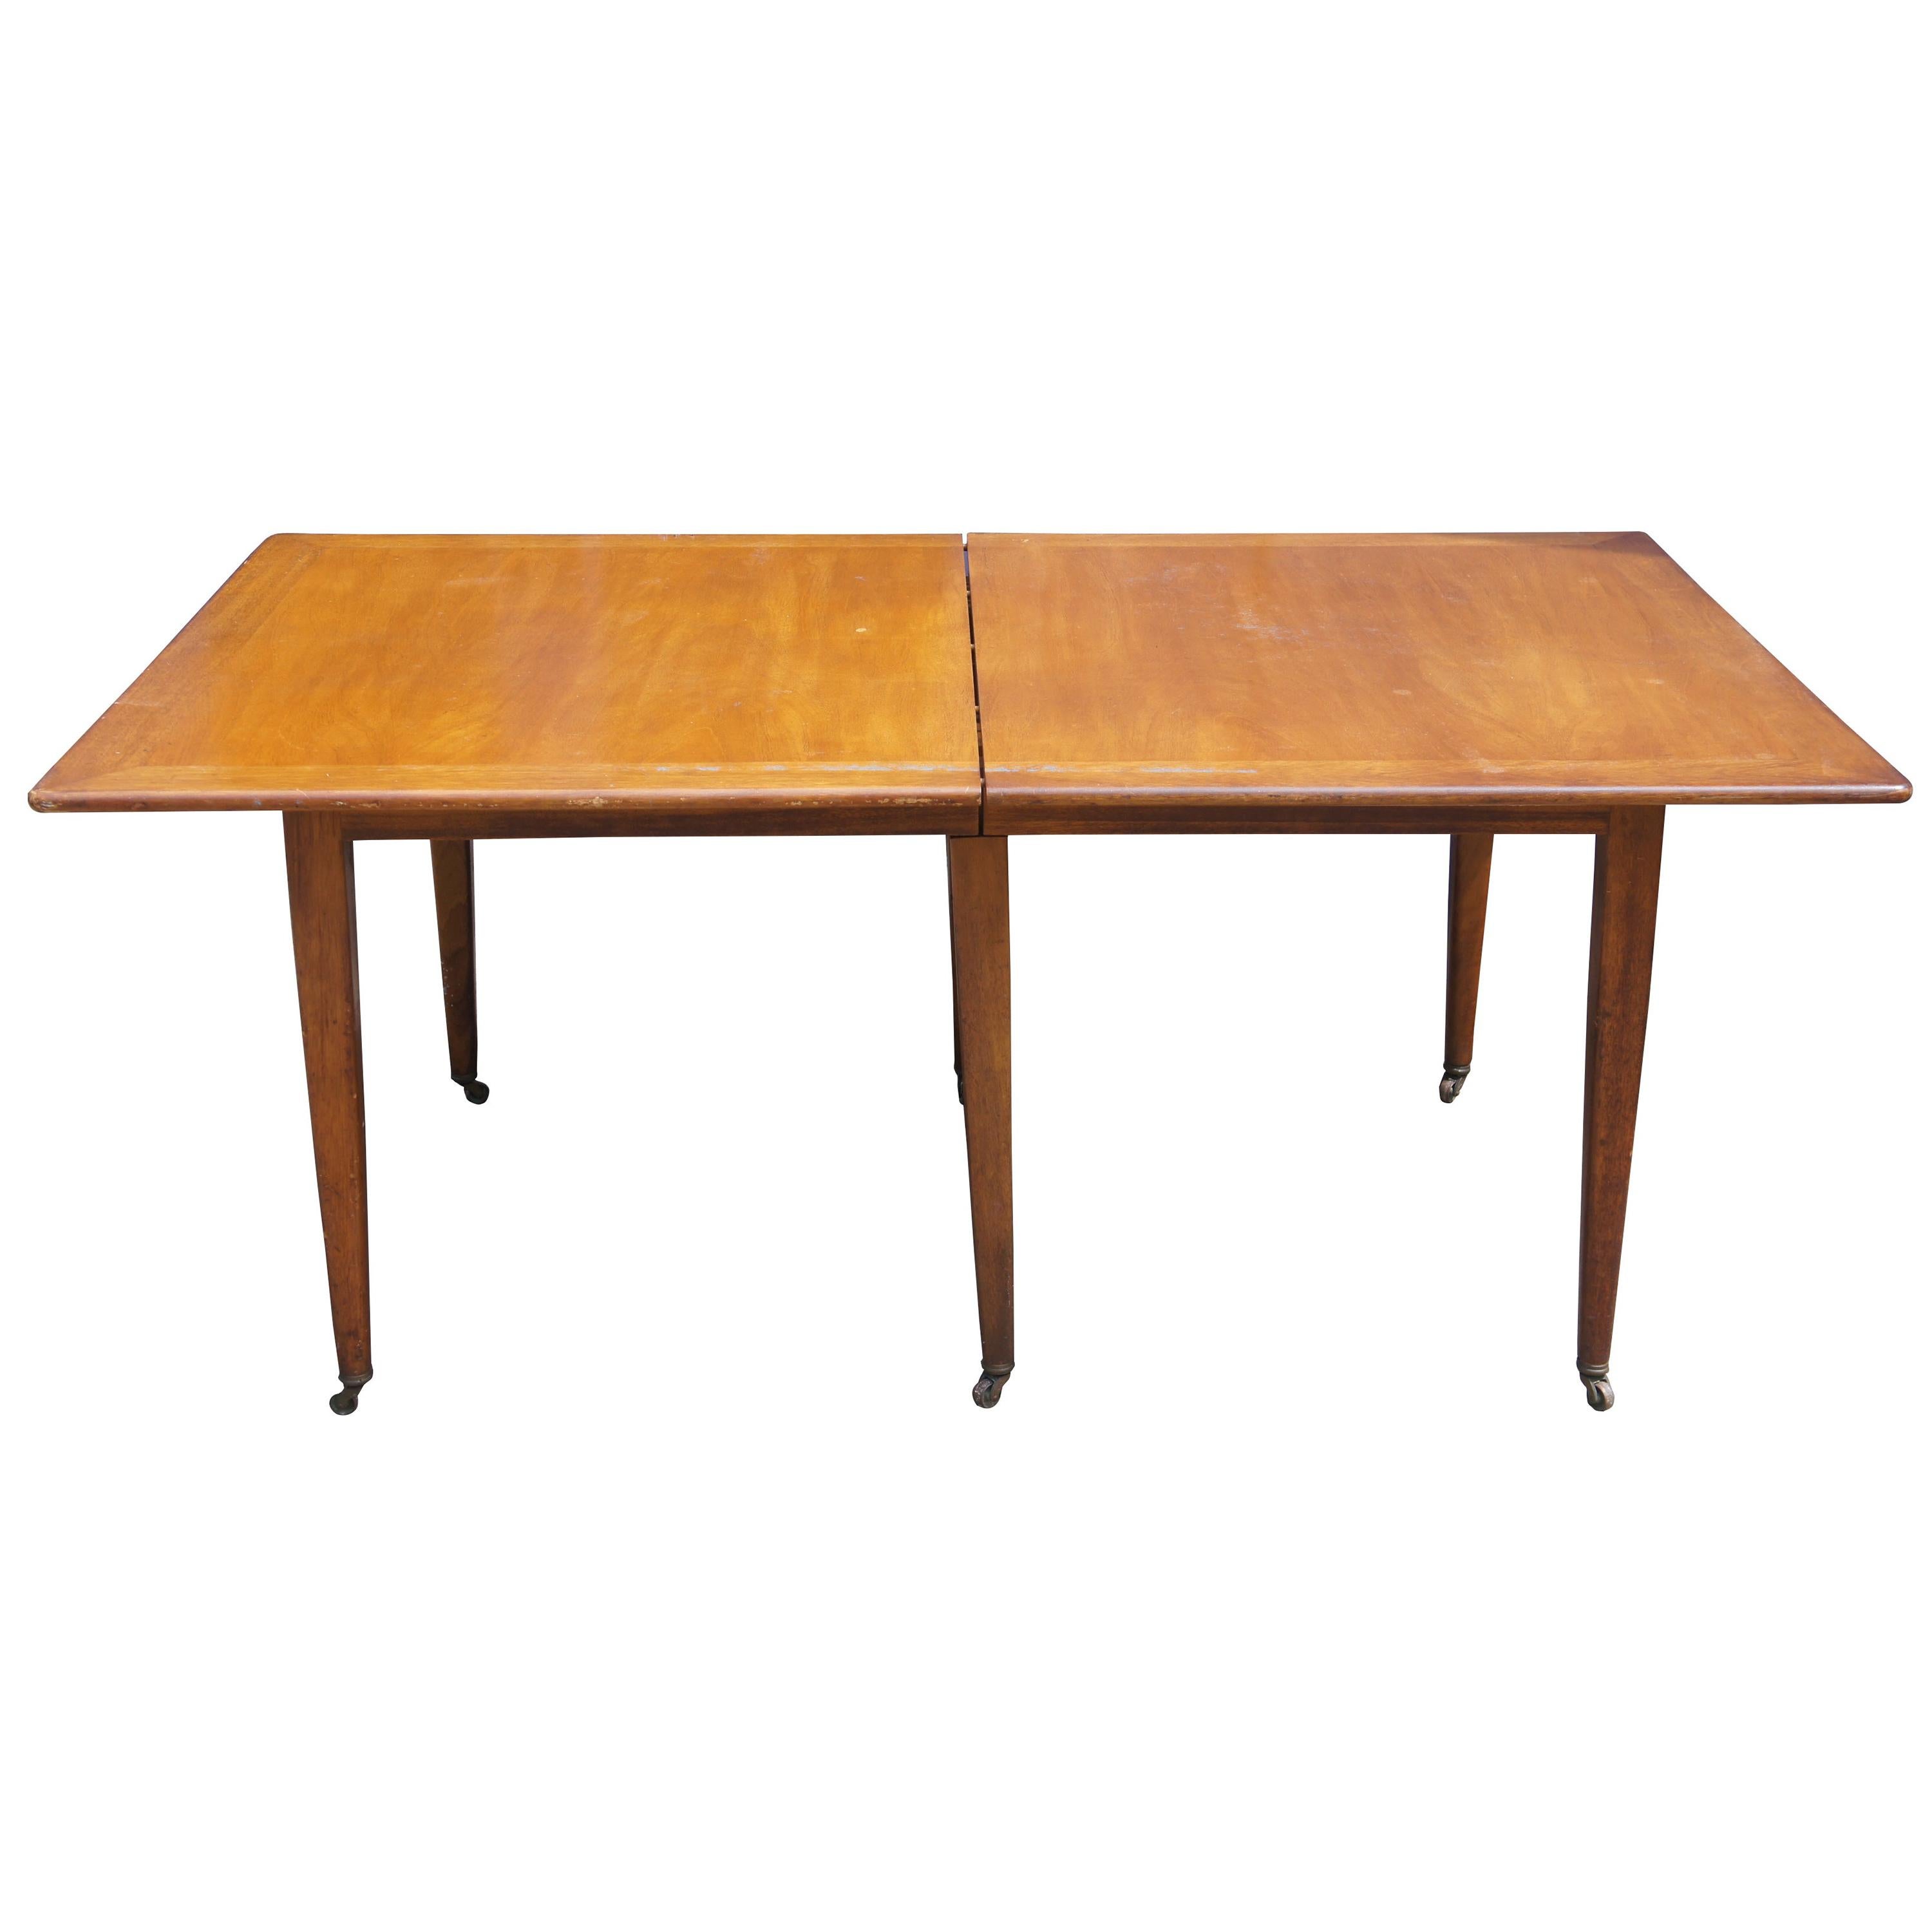 Mid-Century Modern Mahogany Dining Table by Edward Wormley for Dunbar Furniture